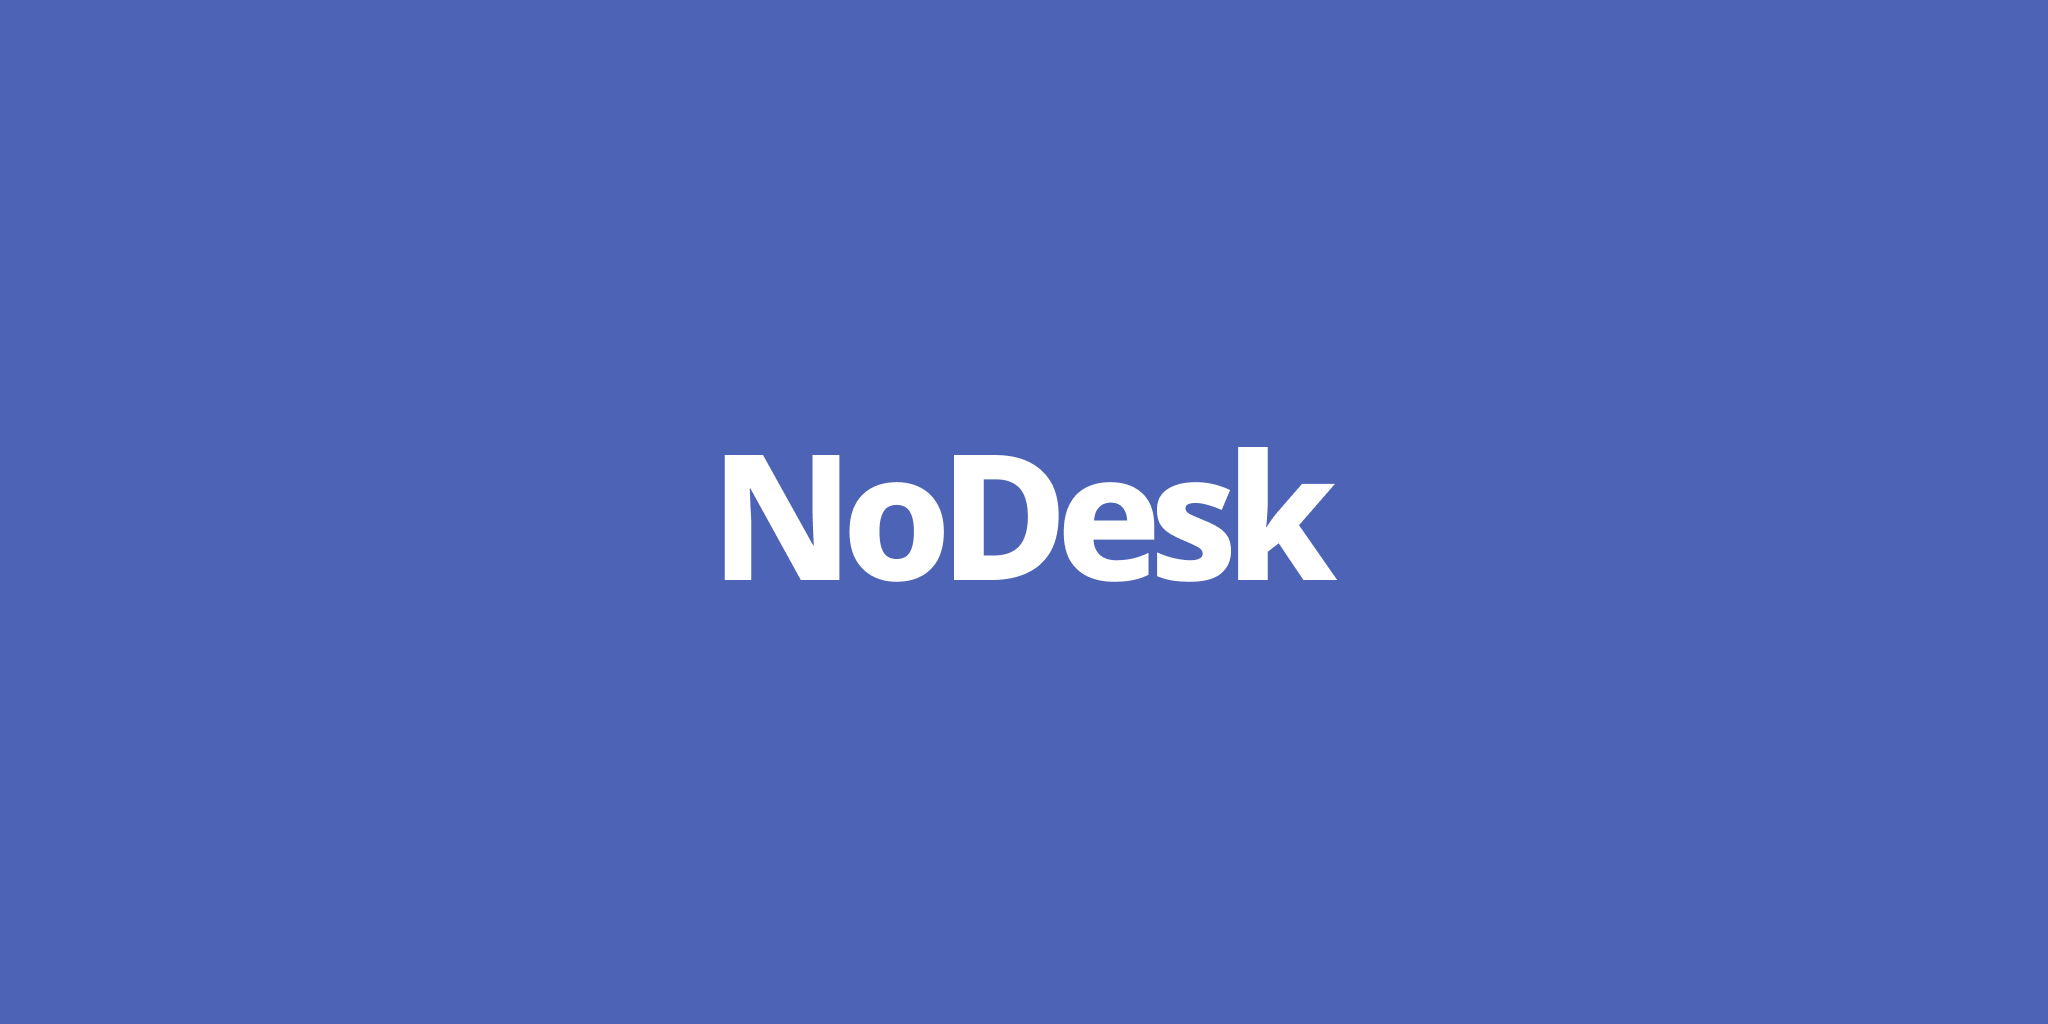 NoDesk - Where Everyone Works Remote